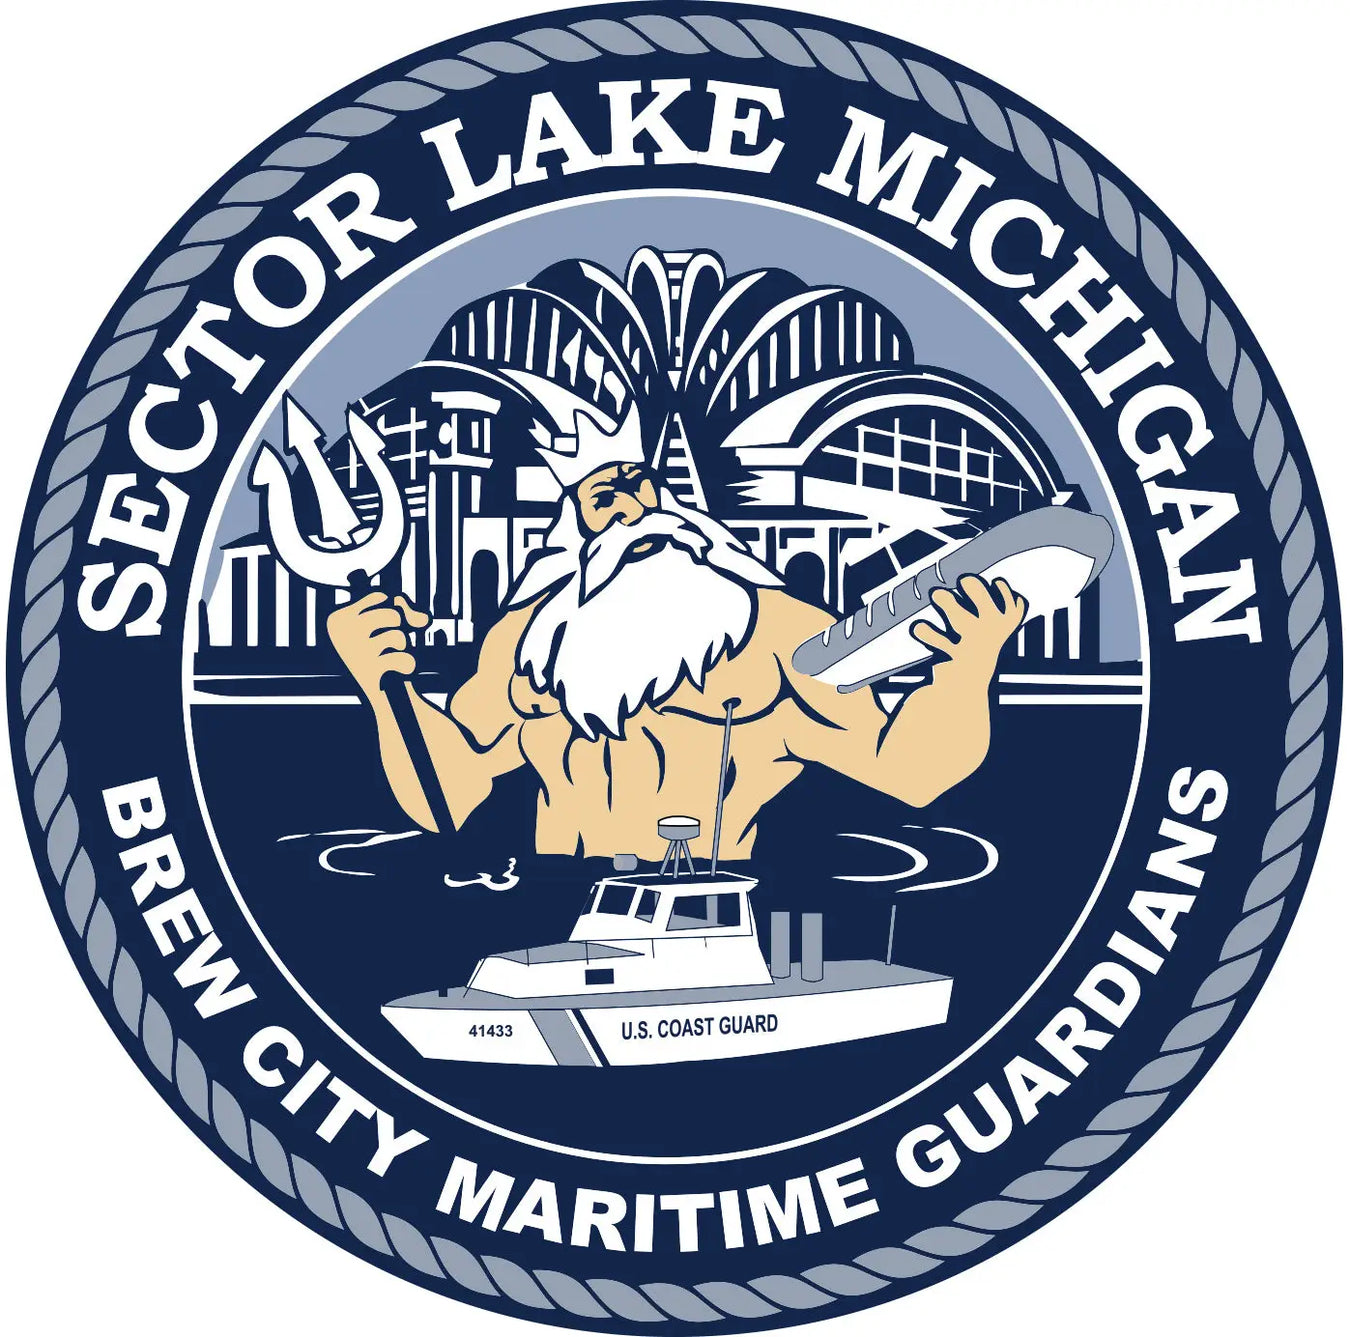 Sector Lake Michigan